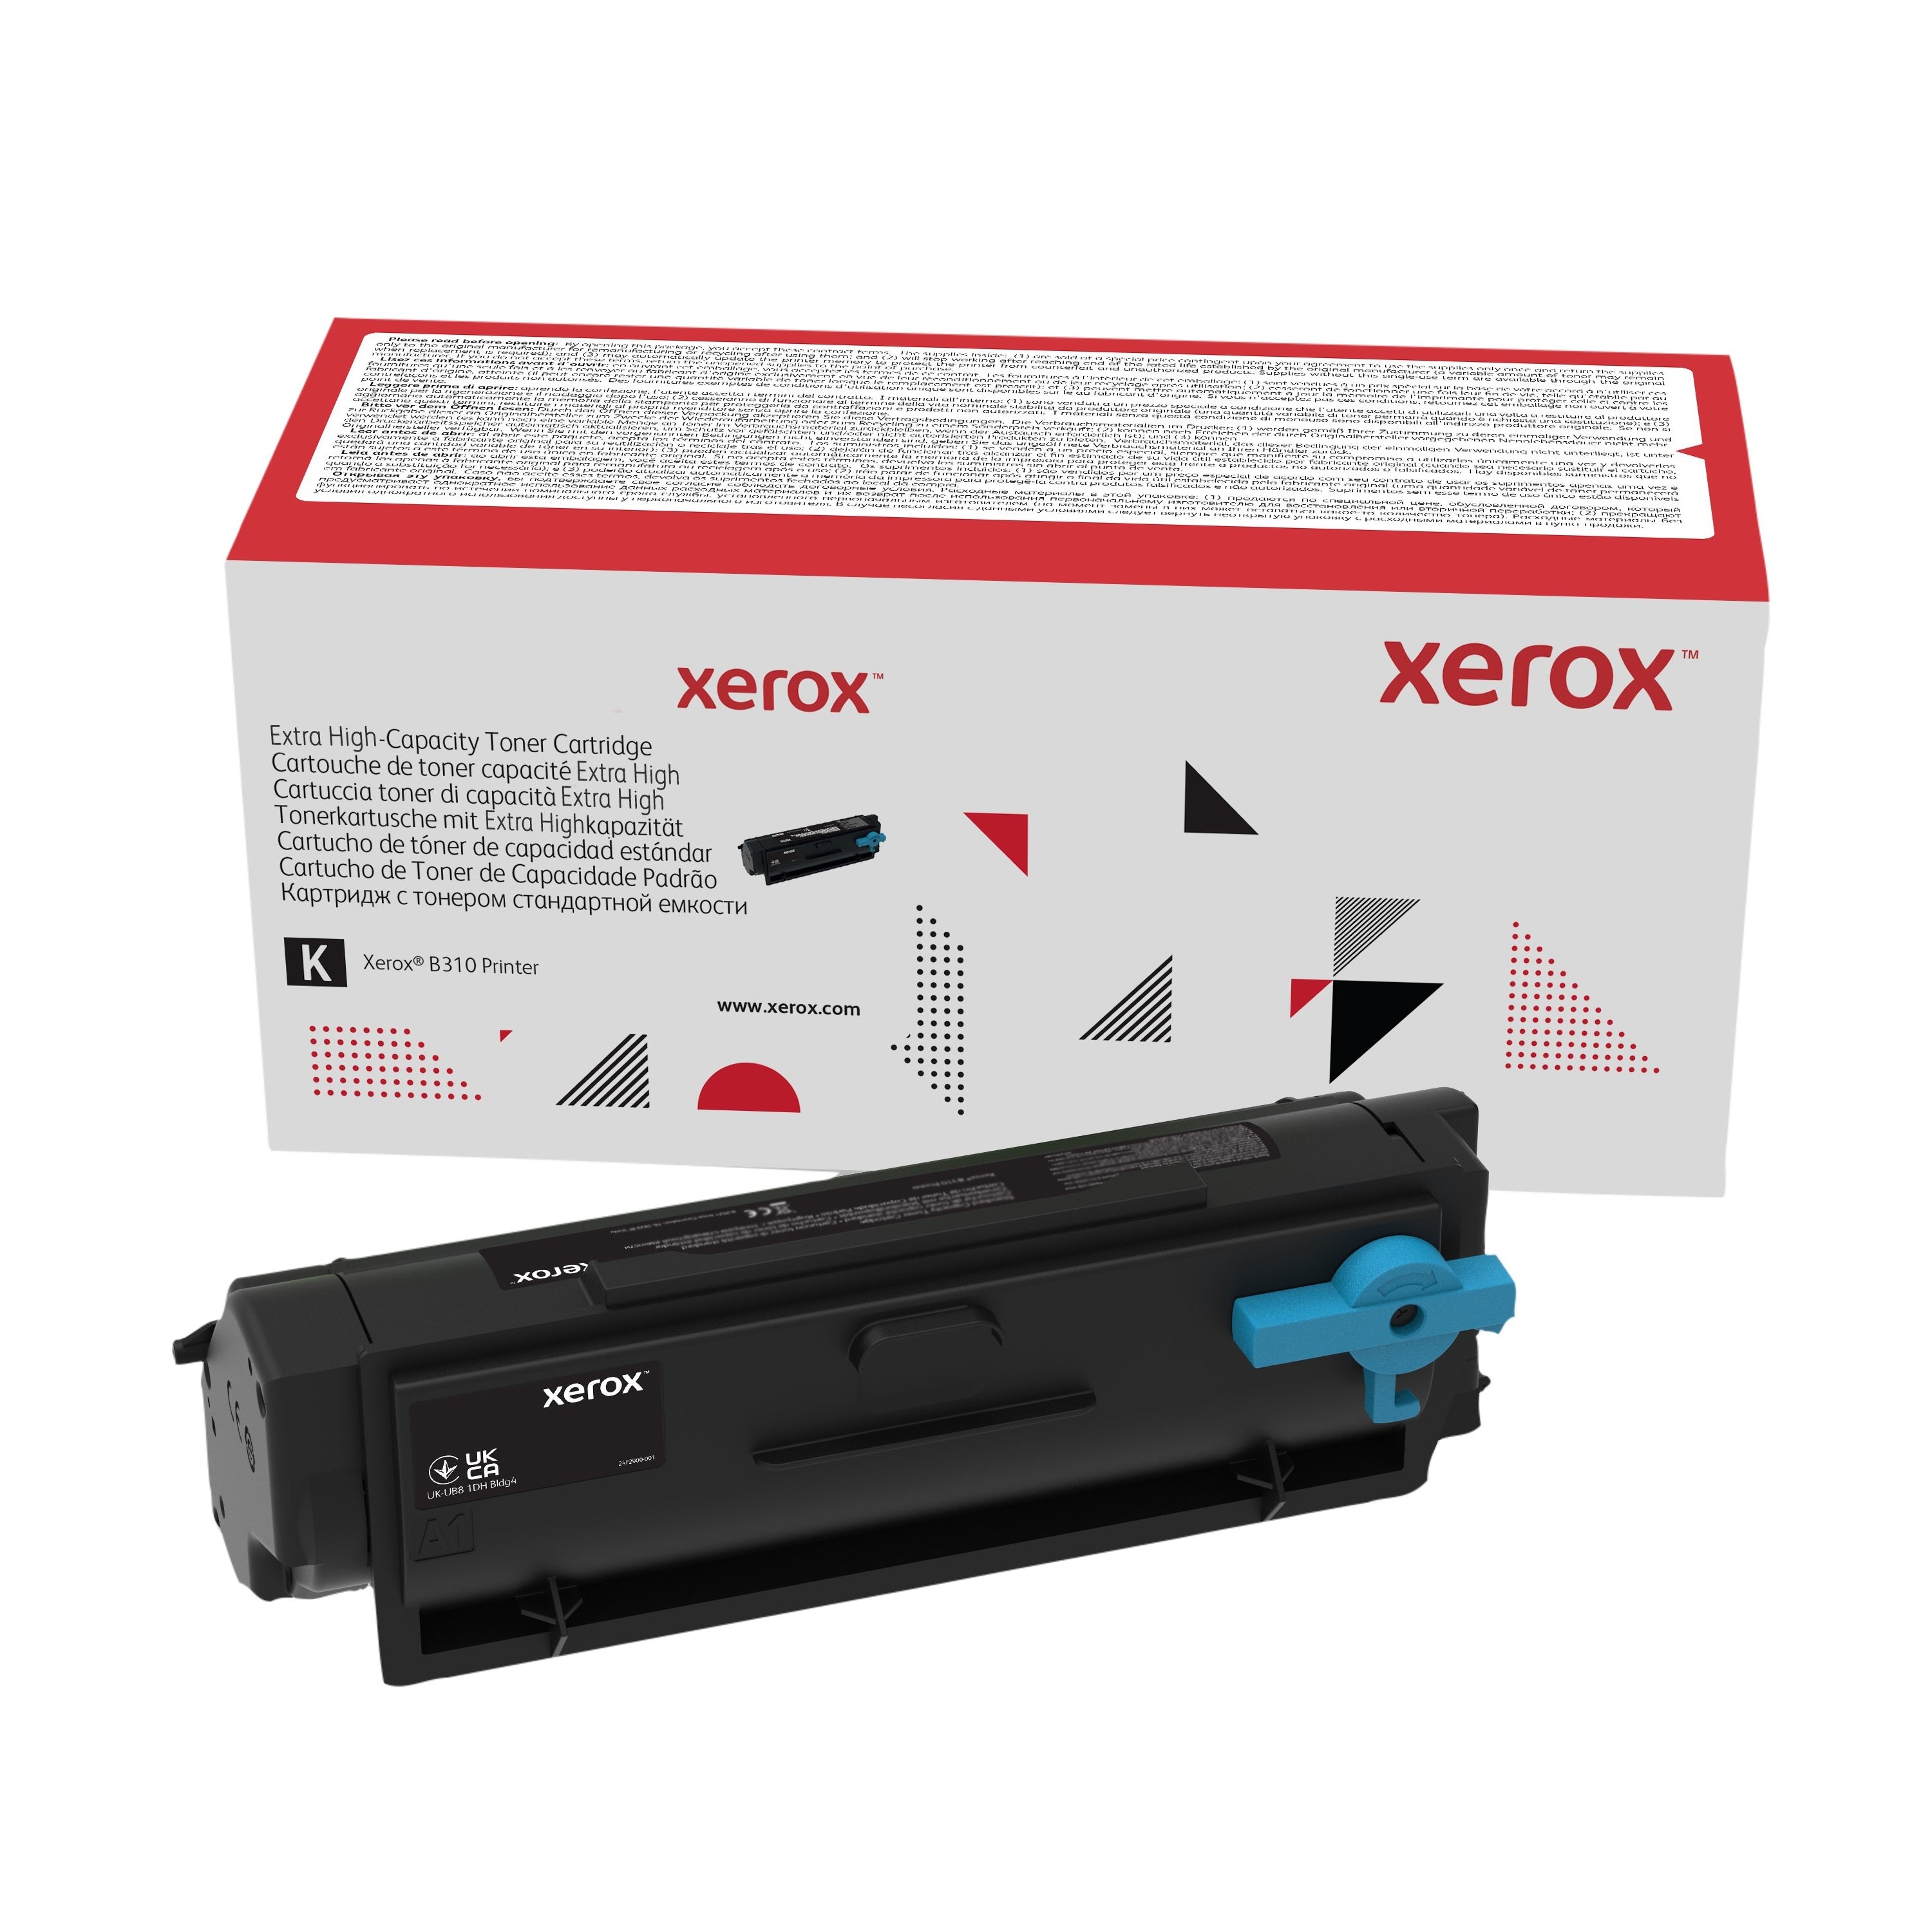 Absolute Toner Genuine Xerox 006R04378 Black Extra High Capacity Toner Cartridge, Xerox B305/B310/B315 Printer Original Xerox Cartridges